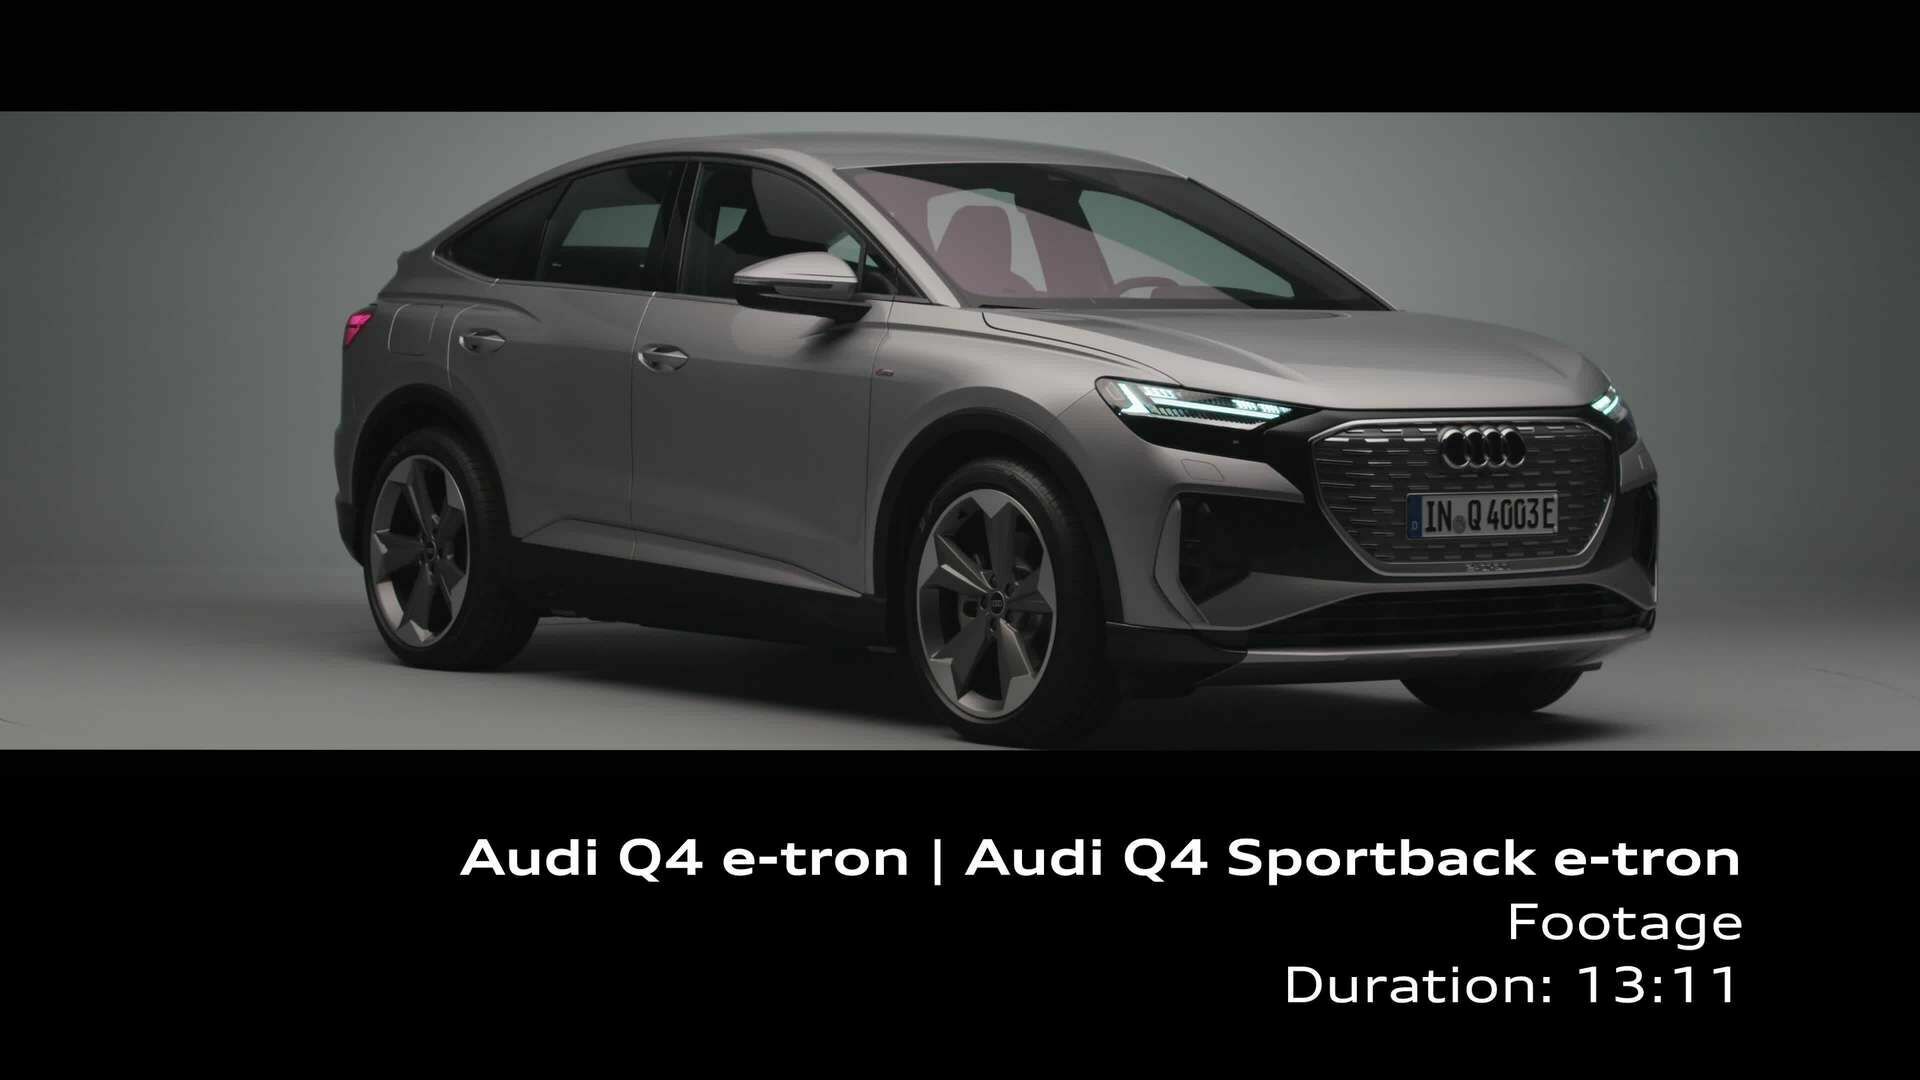 Footage: Audi Q4 e-tron and Q4 Sportback e-tron im Studio